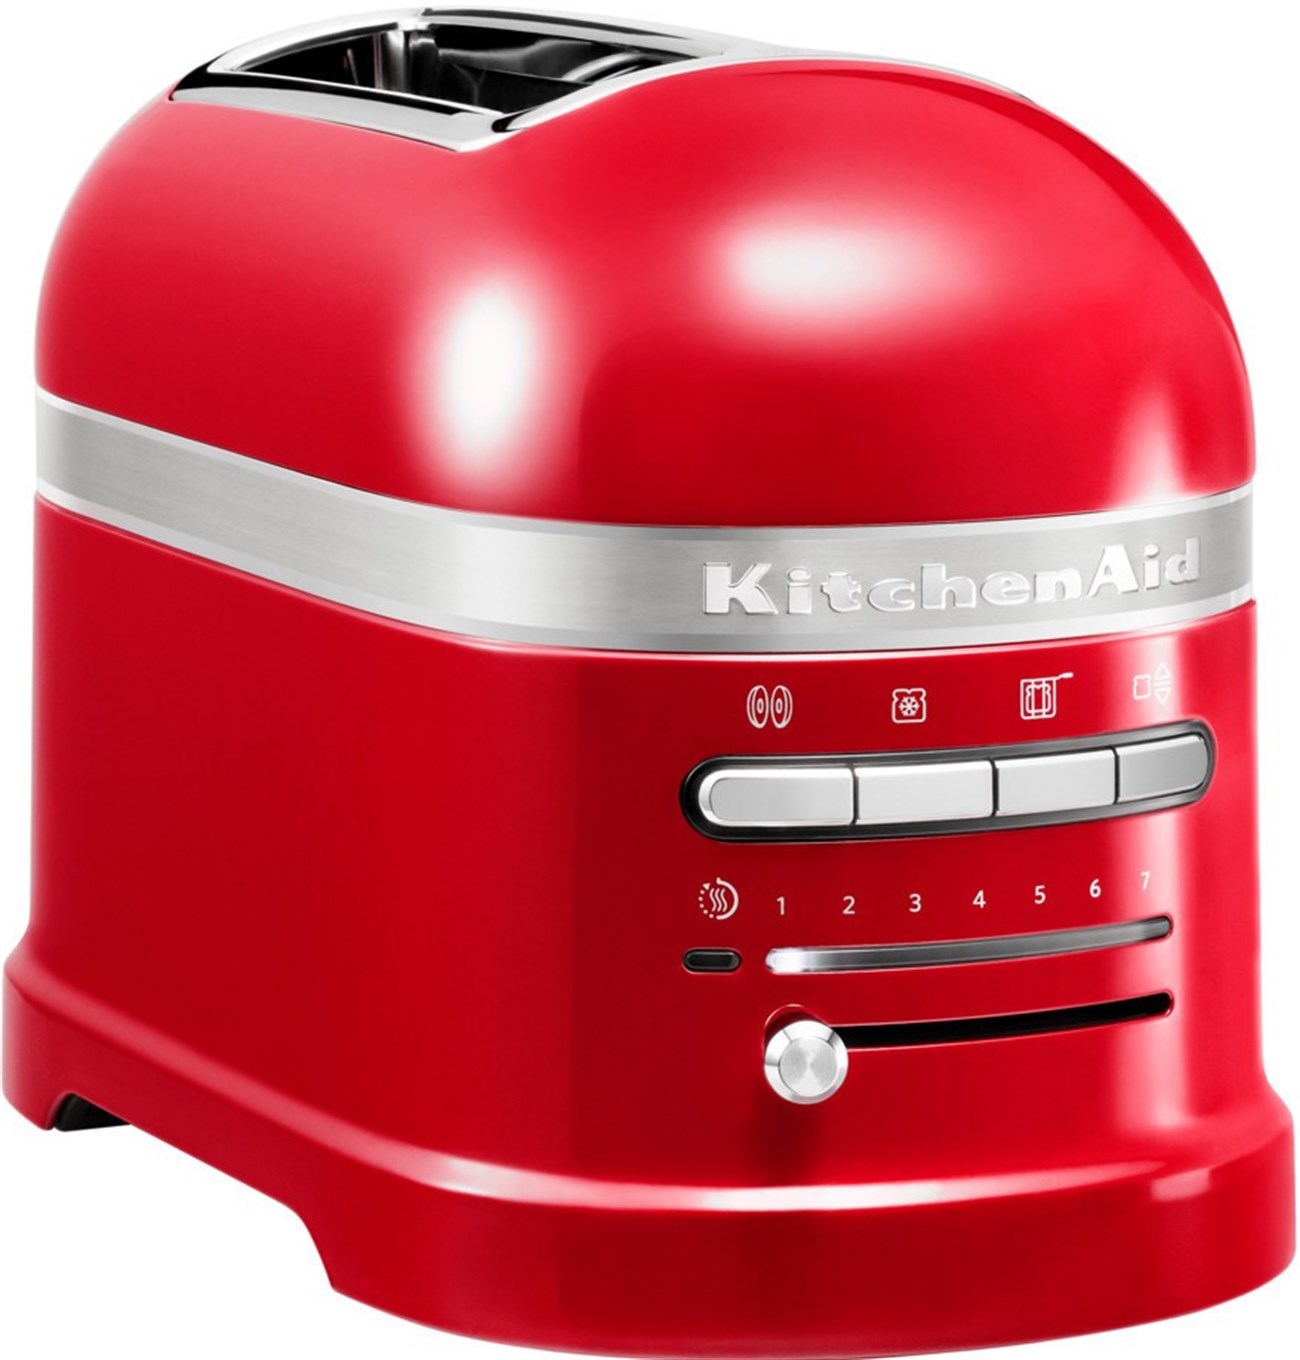 Kitchenaid Artisan 5KMT2204EER Toaster